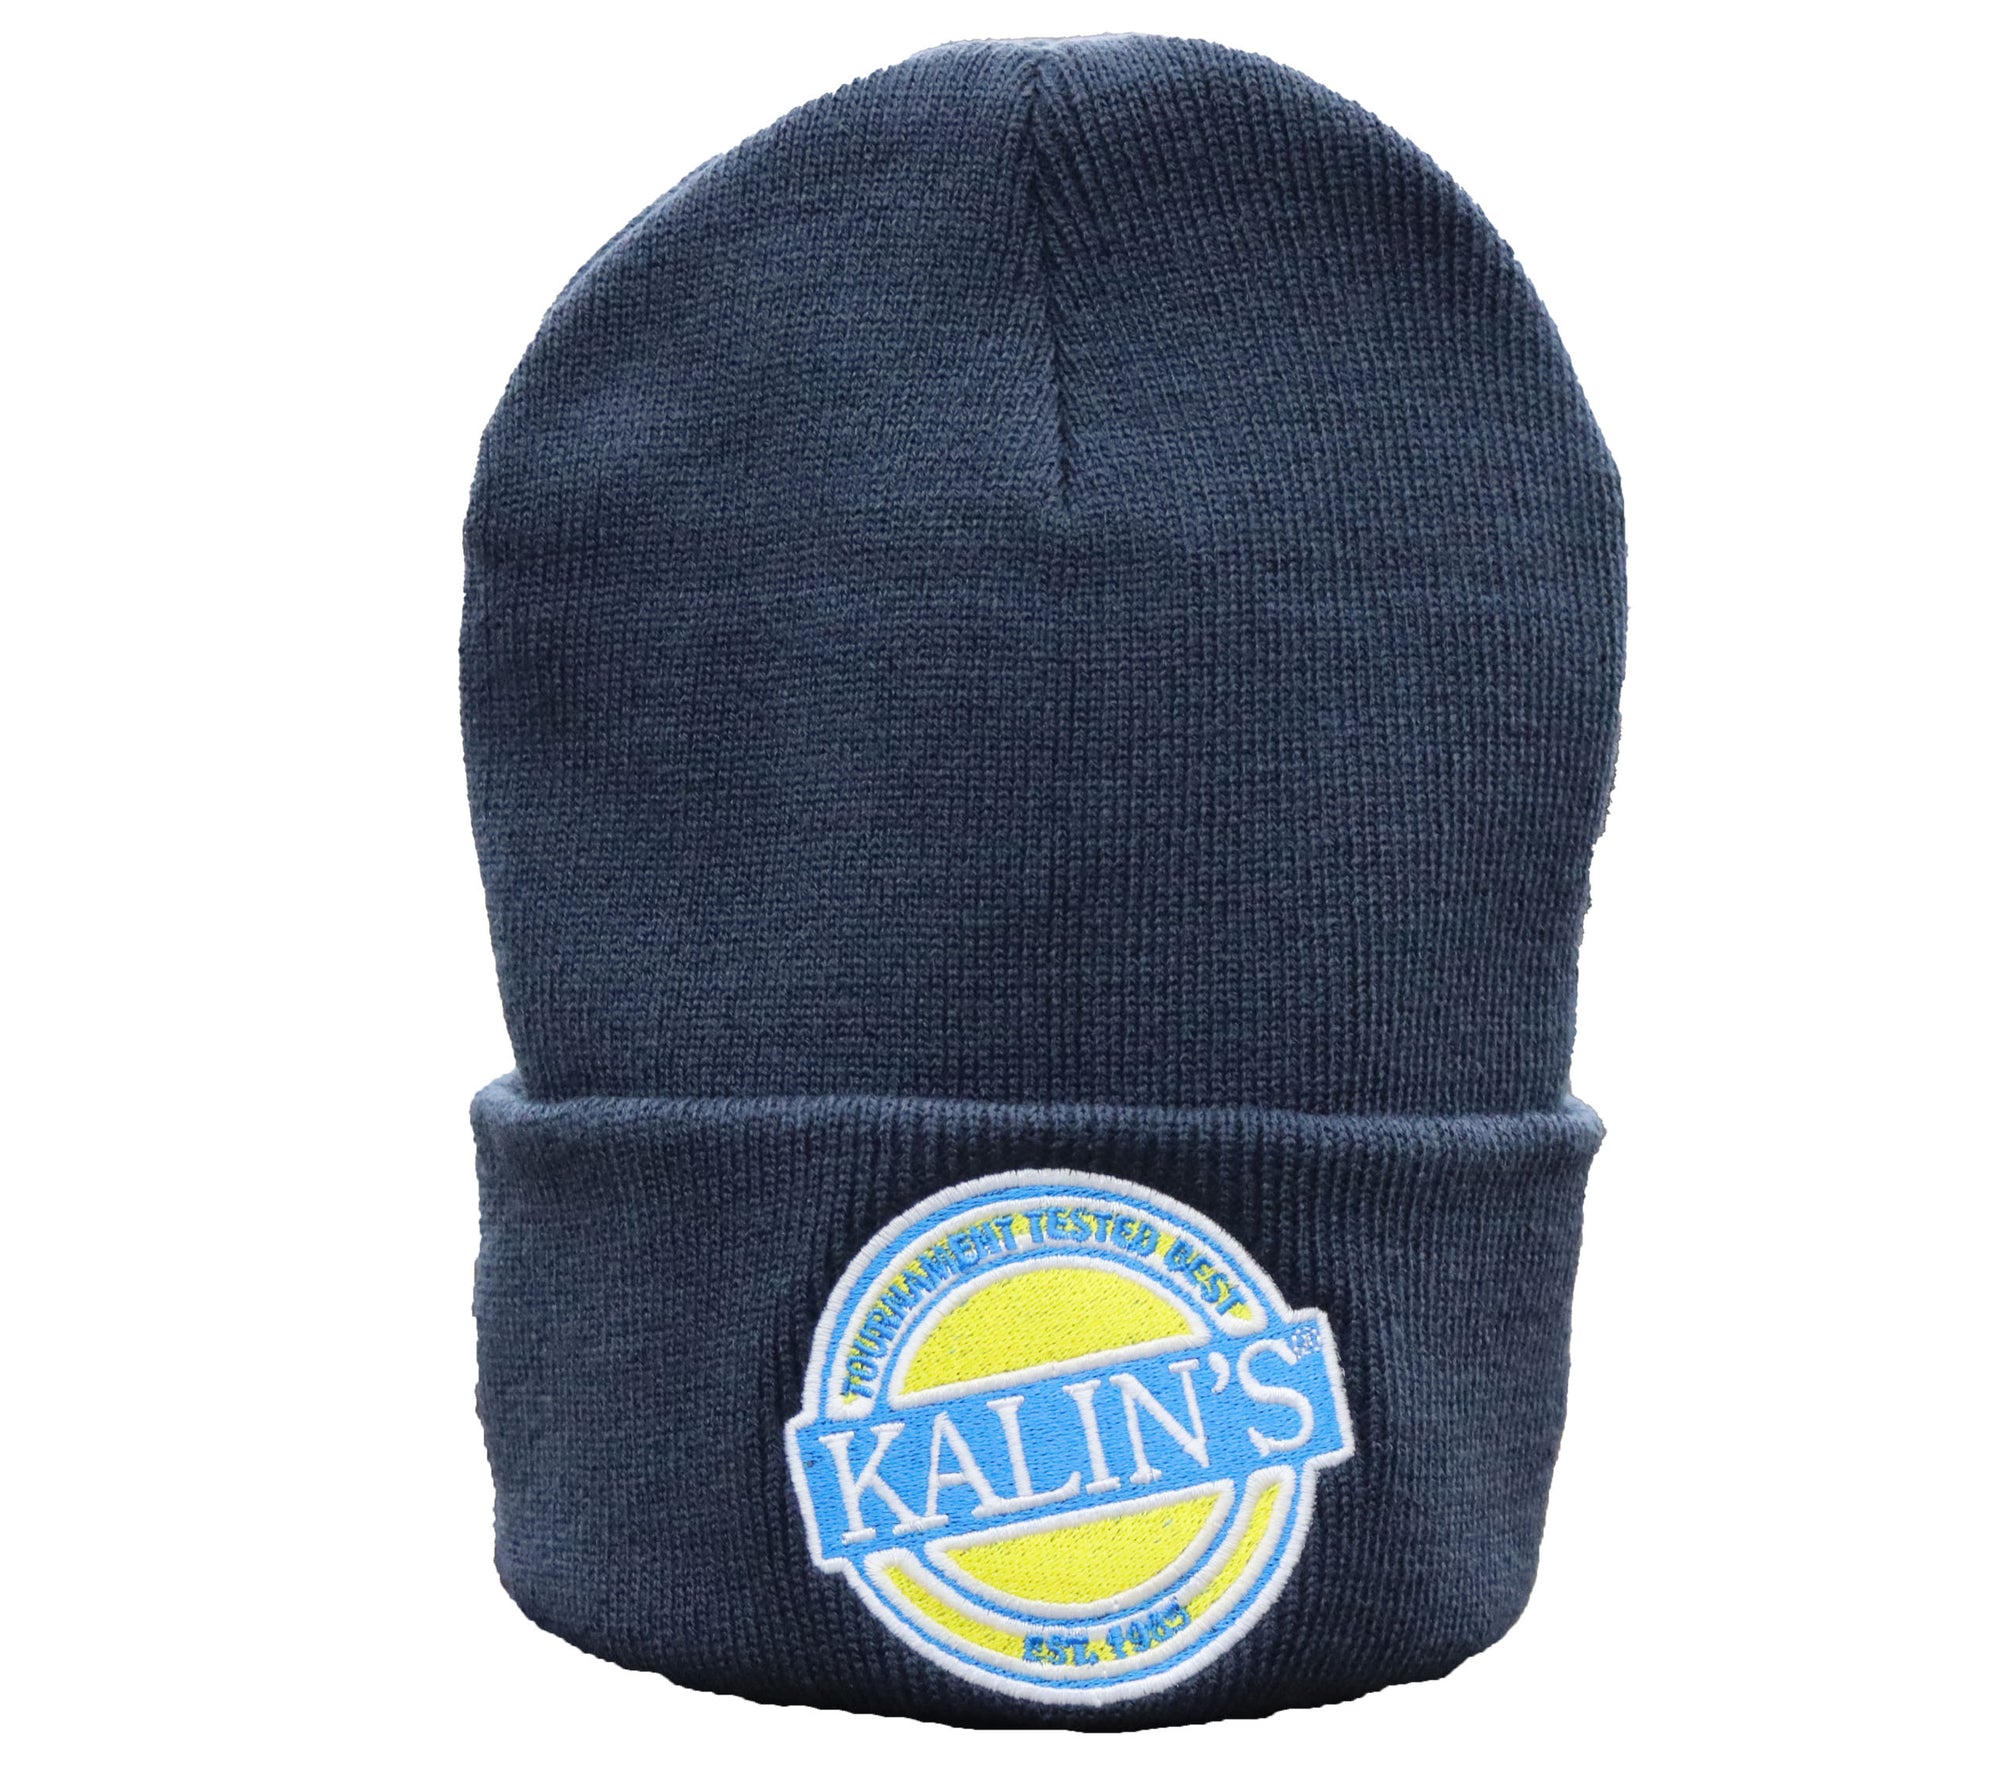 Kalin's Navy Fleece Lined Knit Cap